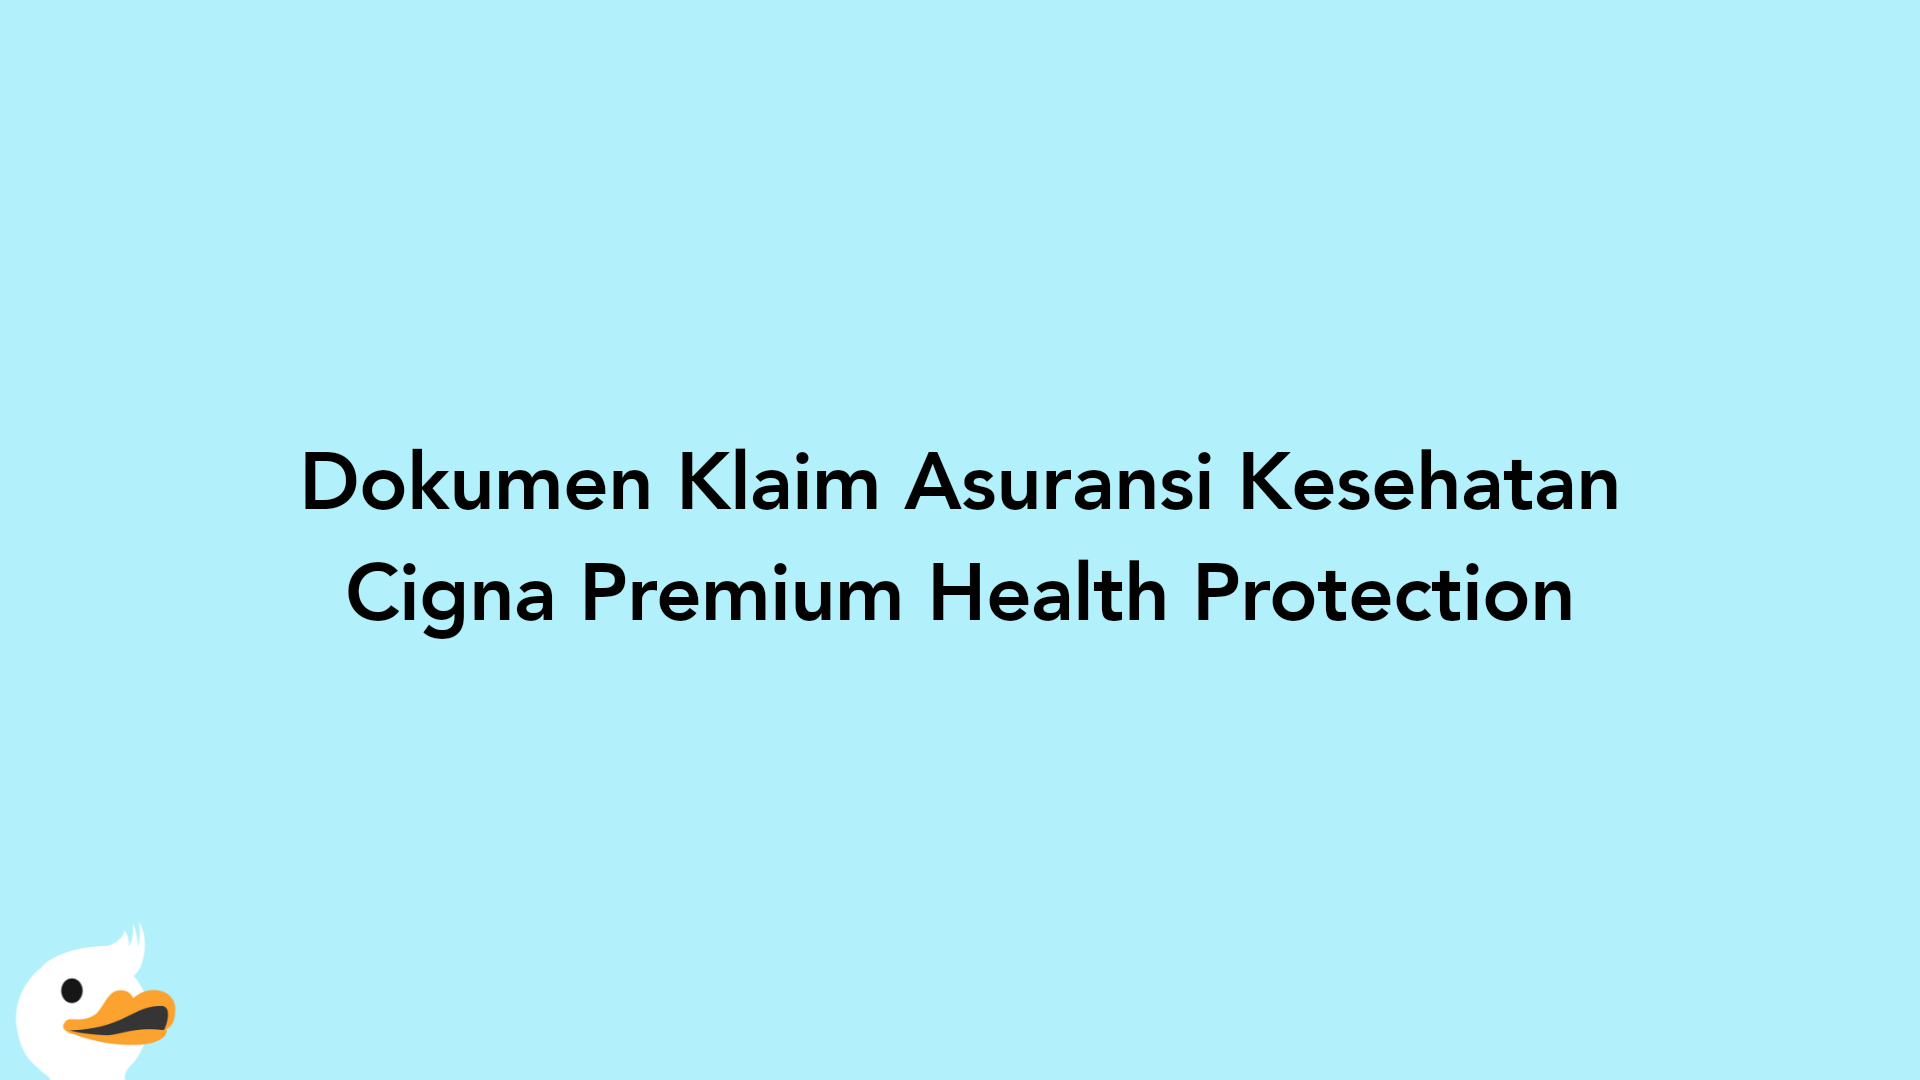 Dokumen Klaim Asuransi Kesehatan Cigna Premium Health Protection